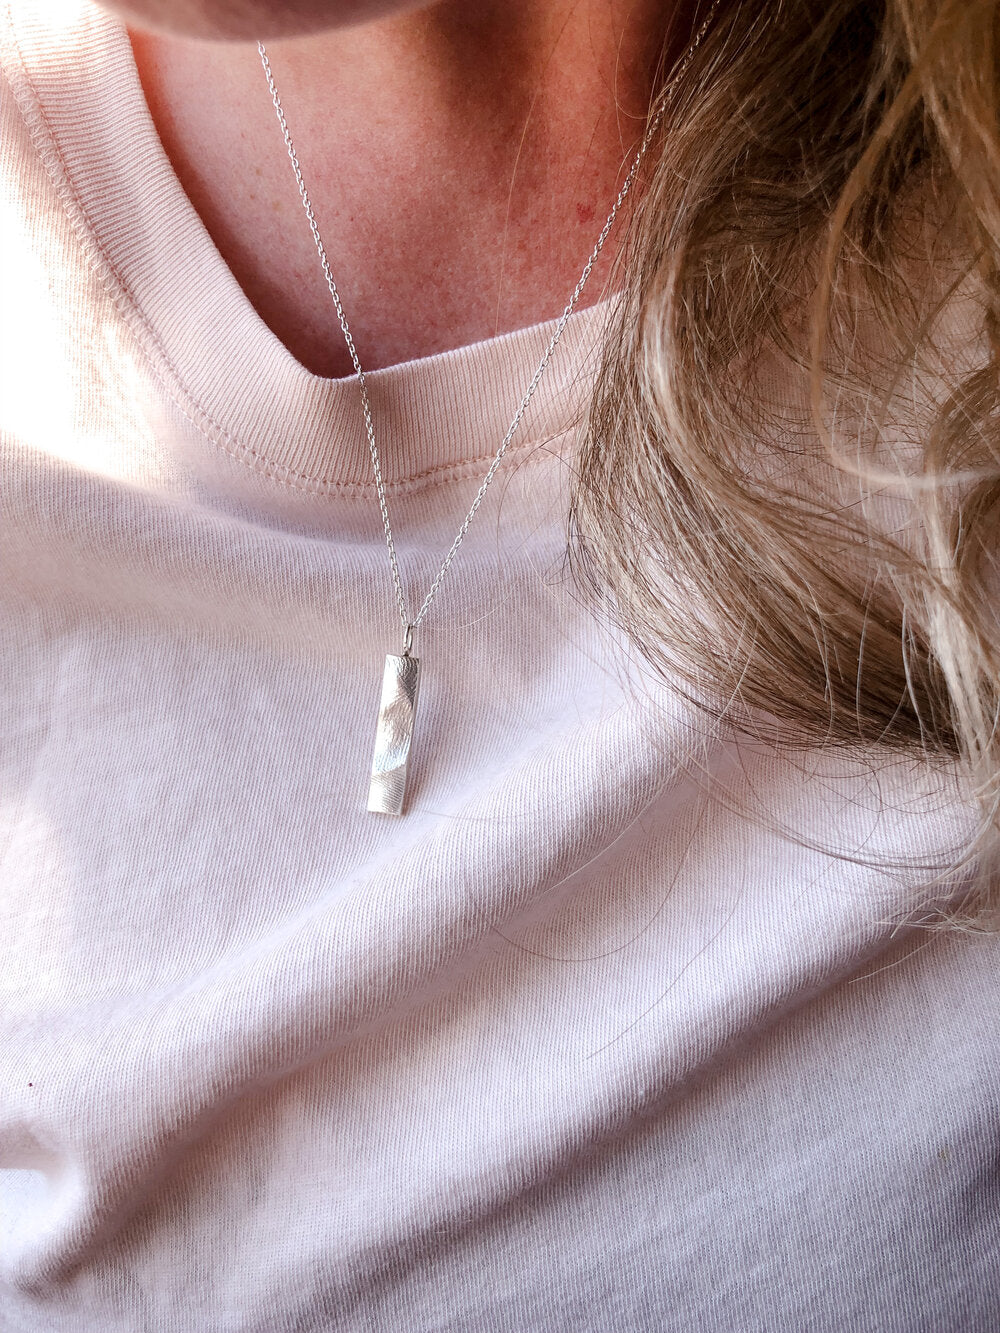 Family Bar Fingerprint Pendant - Sterling Silver - Fingerprint Impression Kit + Necklace